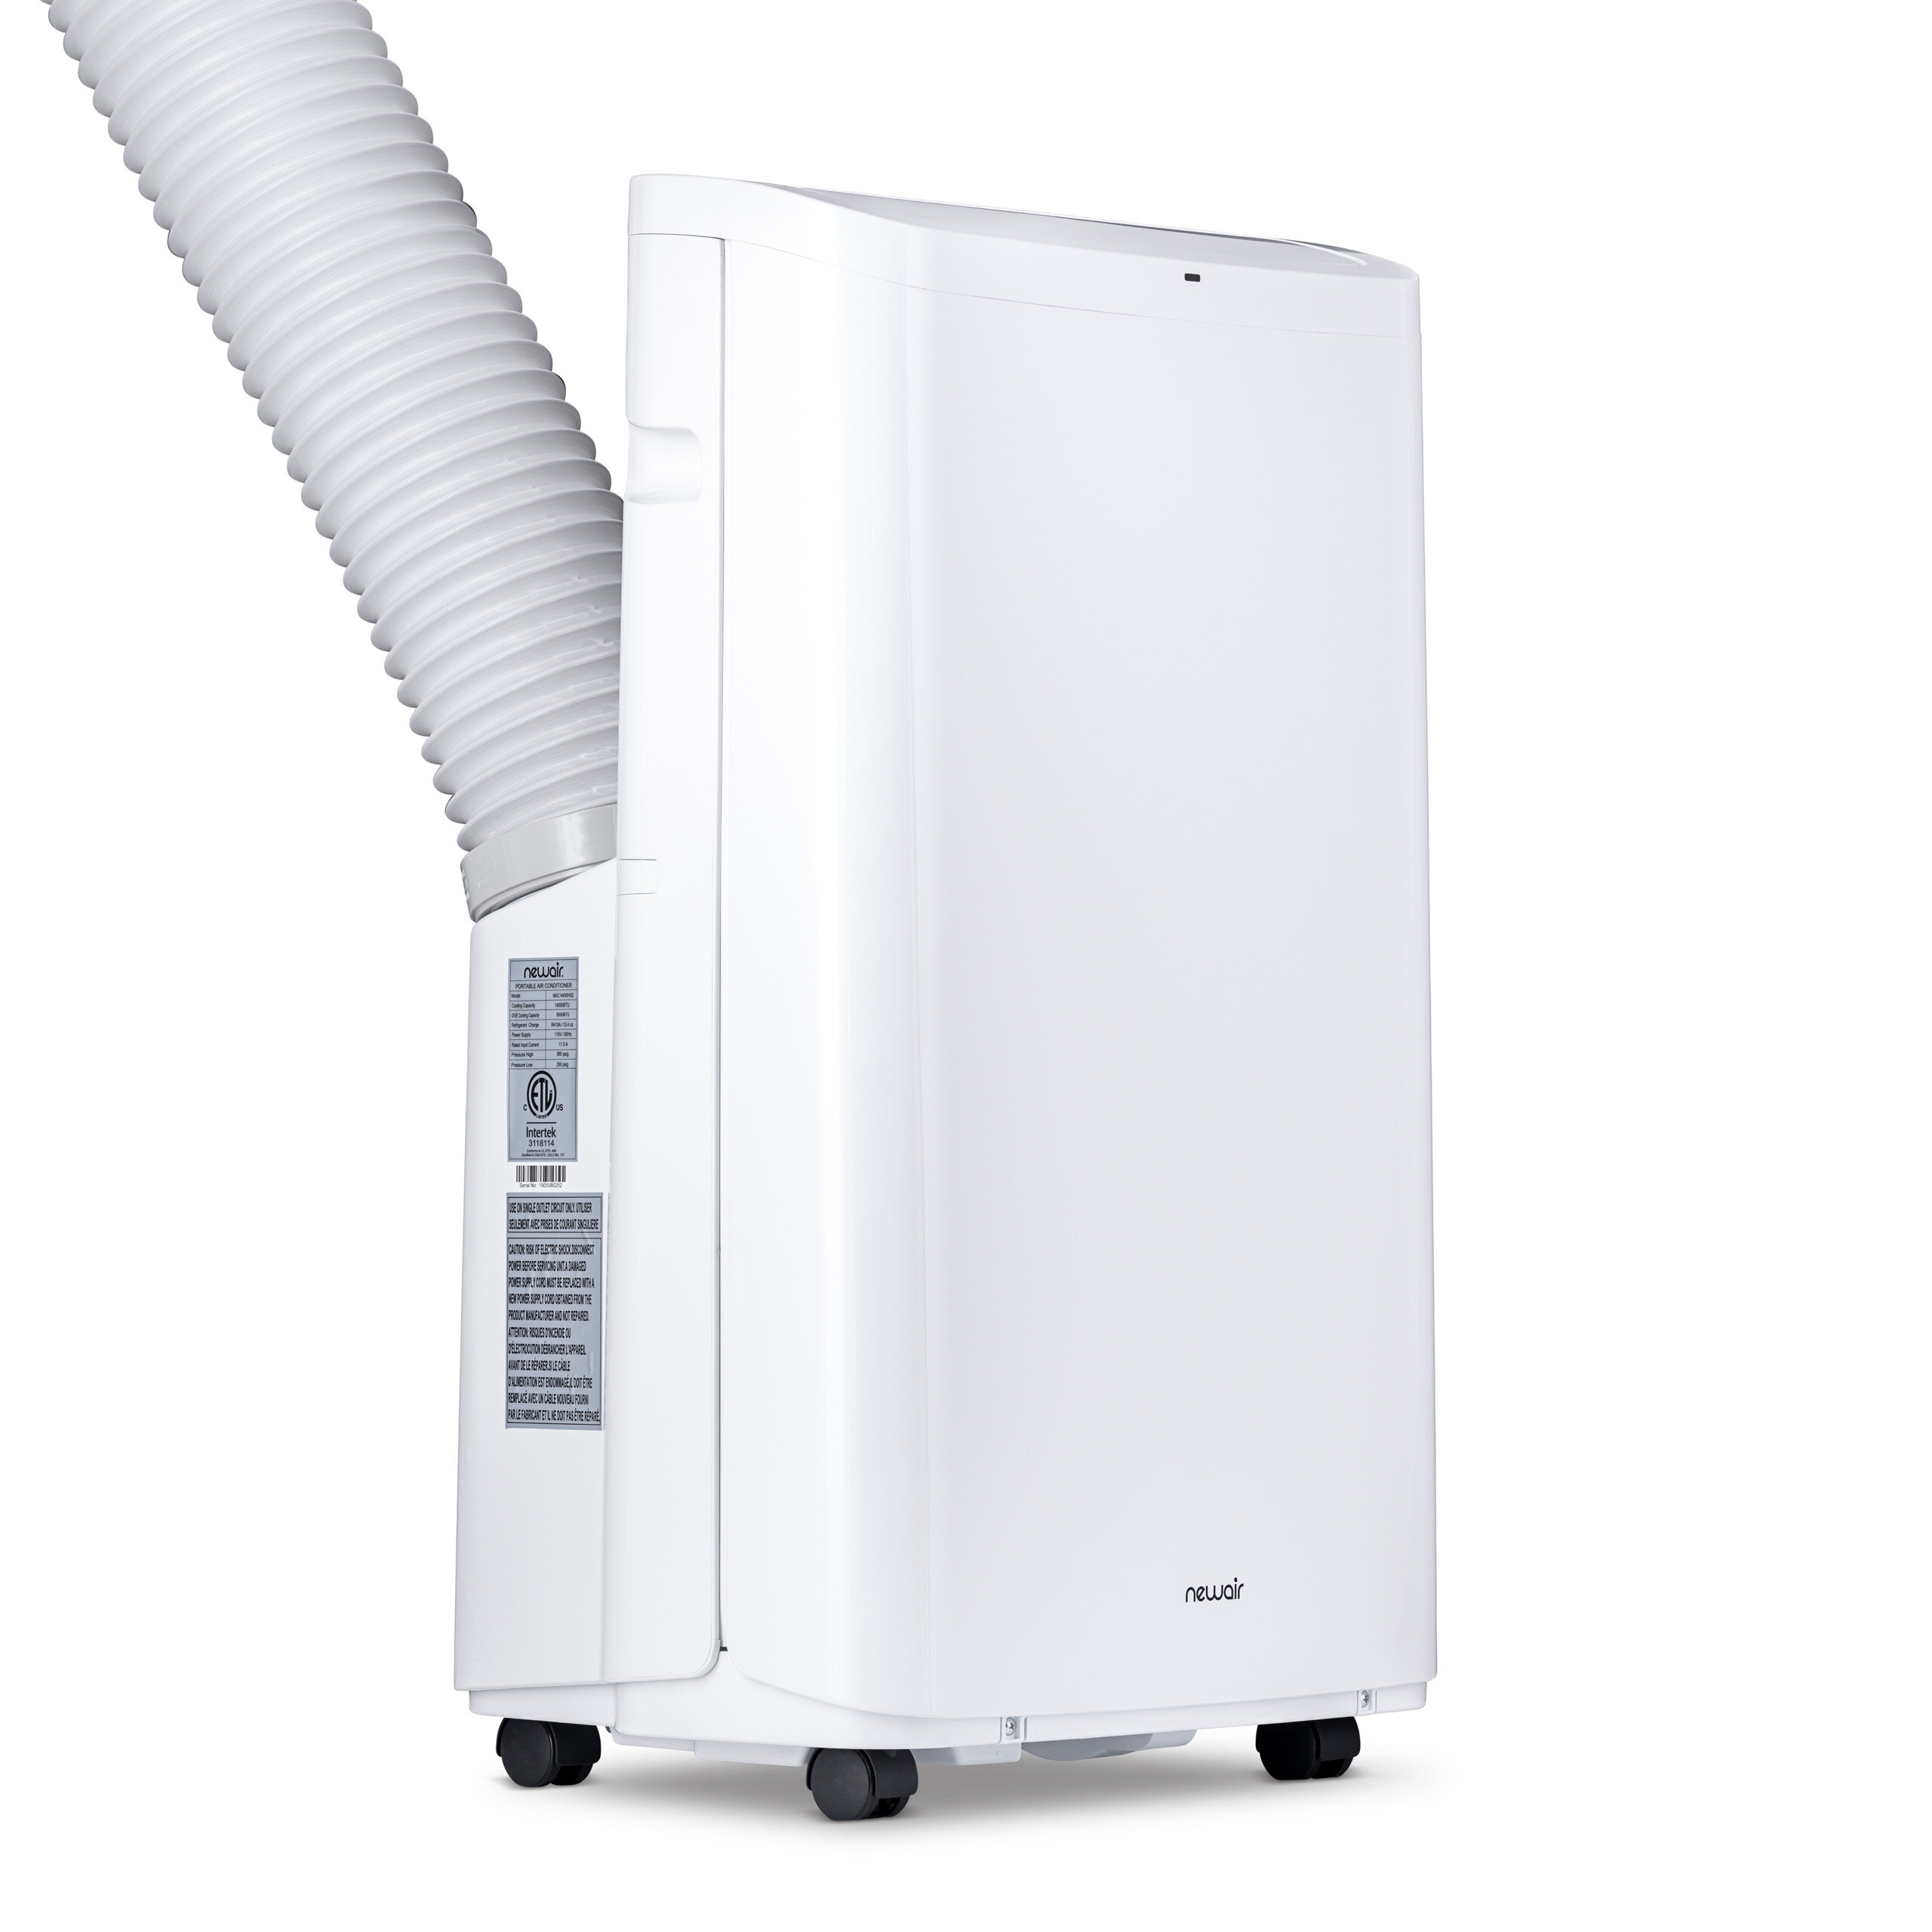 Newair 14,000 BTU Portable Air Conditioner and Heater, Compact AC